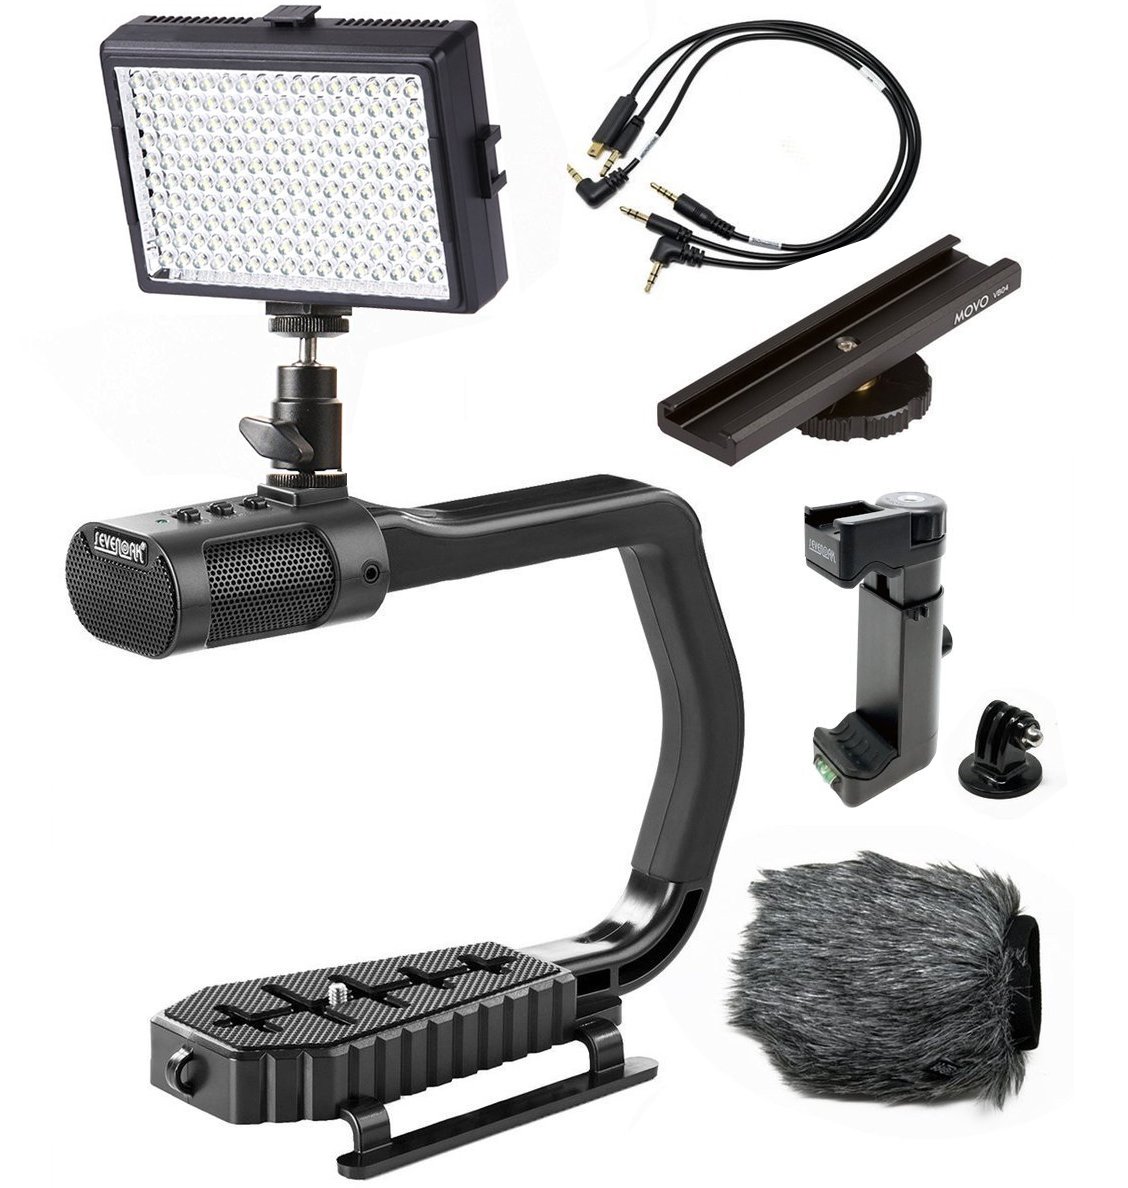 Sevenoak MicRig Video Bundle with Grip Handle, Stereo Microphone, LED Light, Shoe Extender Bracket, Windscreen, & Adapters for DSLR Cameras, Smartphones & GoPro